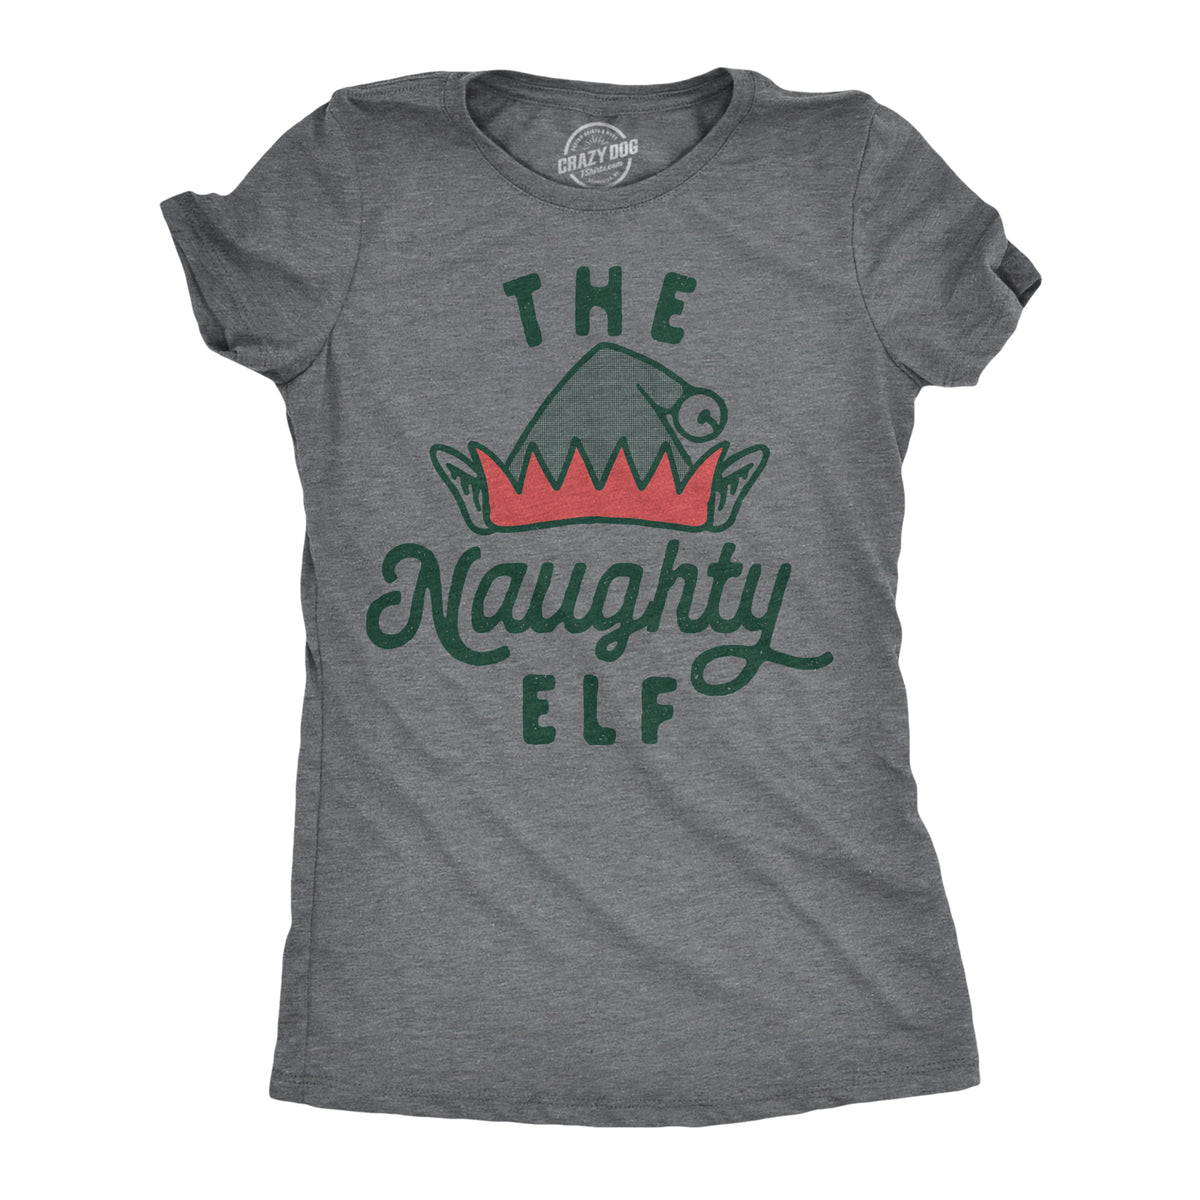 Funny Dark Heather Grey - NAUGHTY The Naughty Elf Womens T Shirt Nerdy Christmas sarcastic Tee